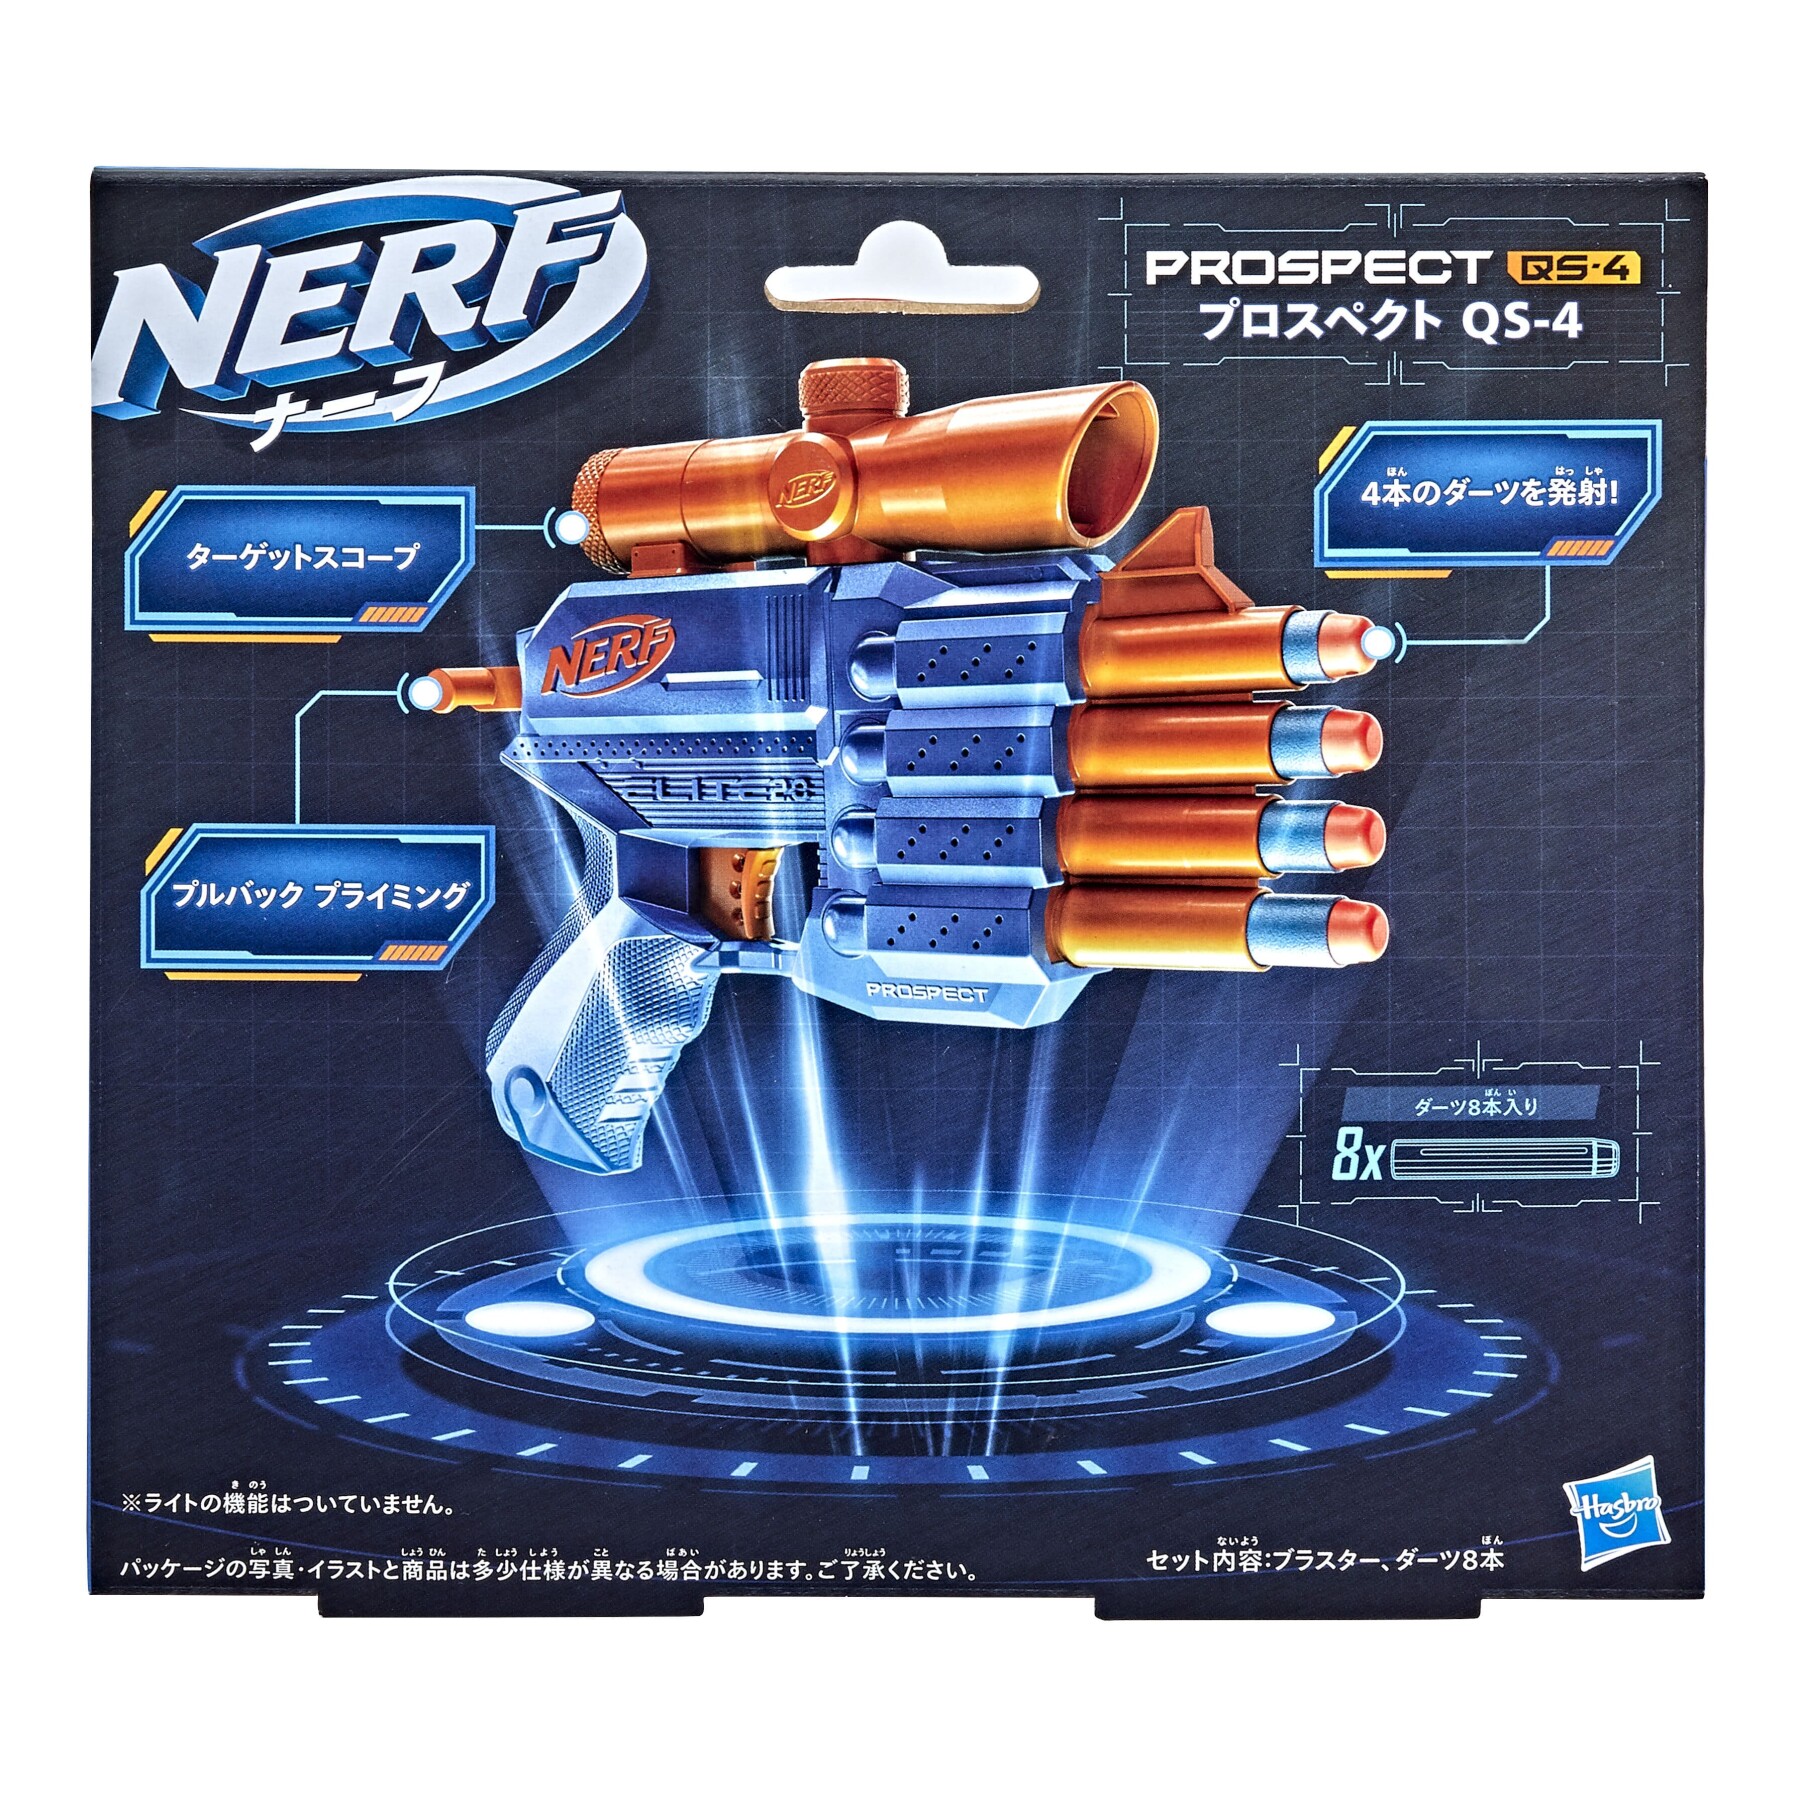 Nerf elite 2.0, blaster prospect qs-4, 8 dardi originali nerf elite, blaster a 4 dardi, mirino telescopico fisso - NERF